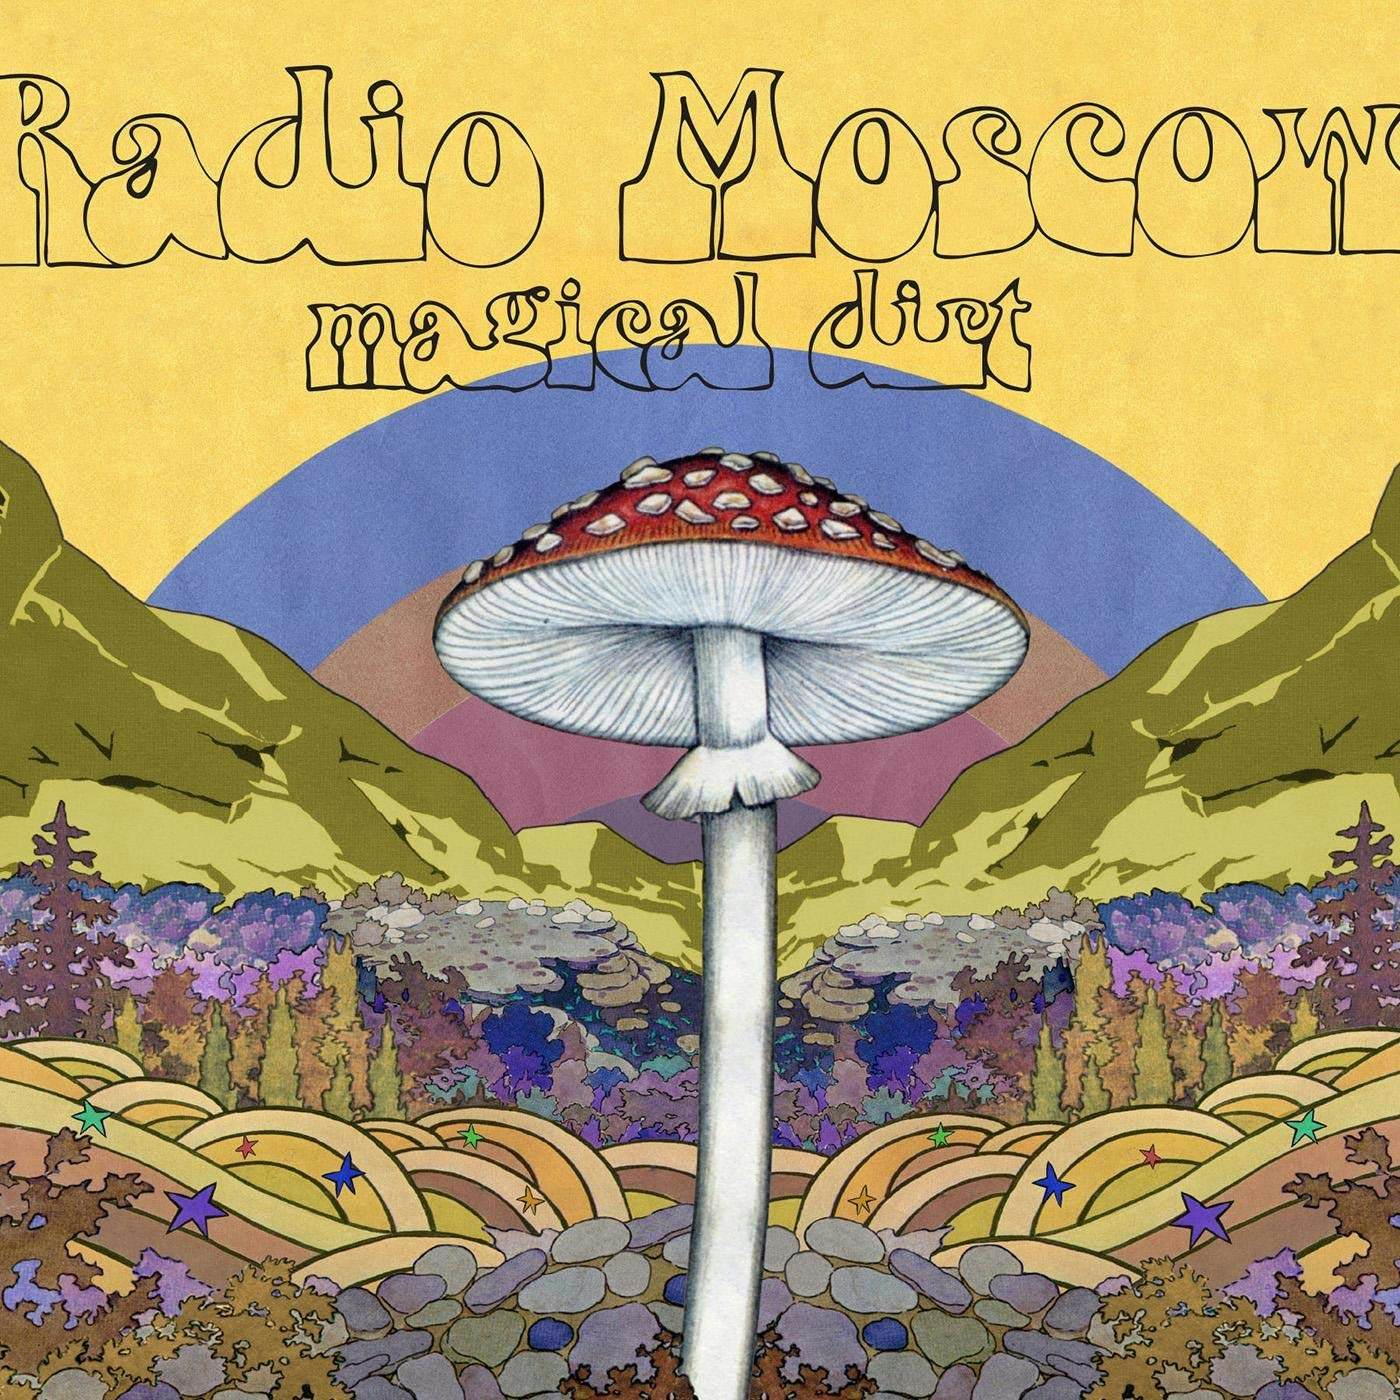 Radio Moscow MAGICAL DIRT (COLOR VINYL) Vinyl Record